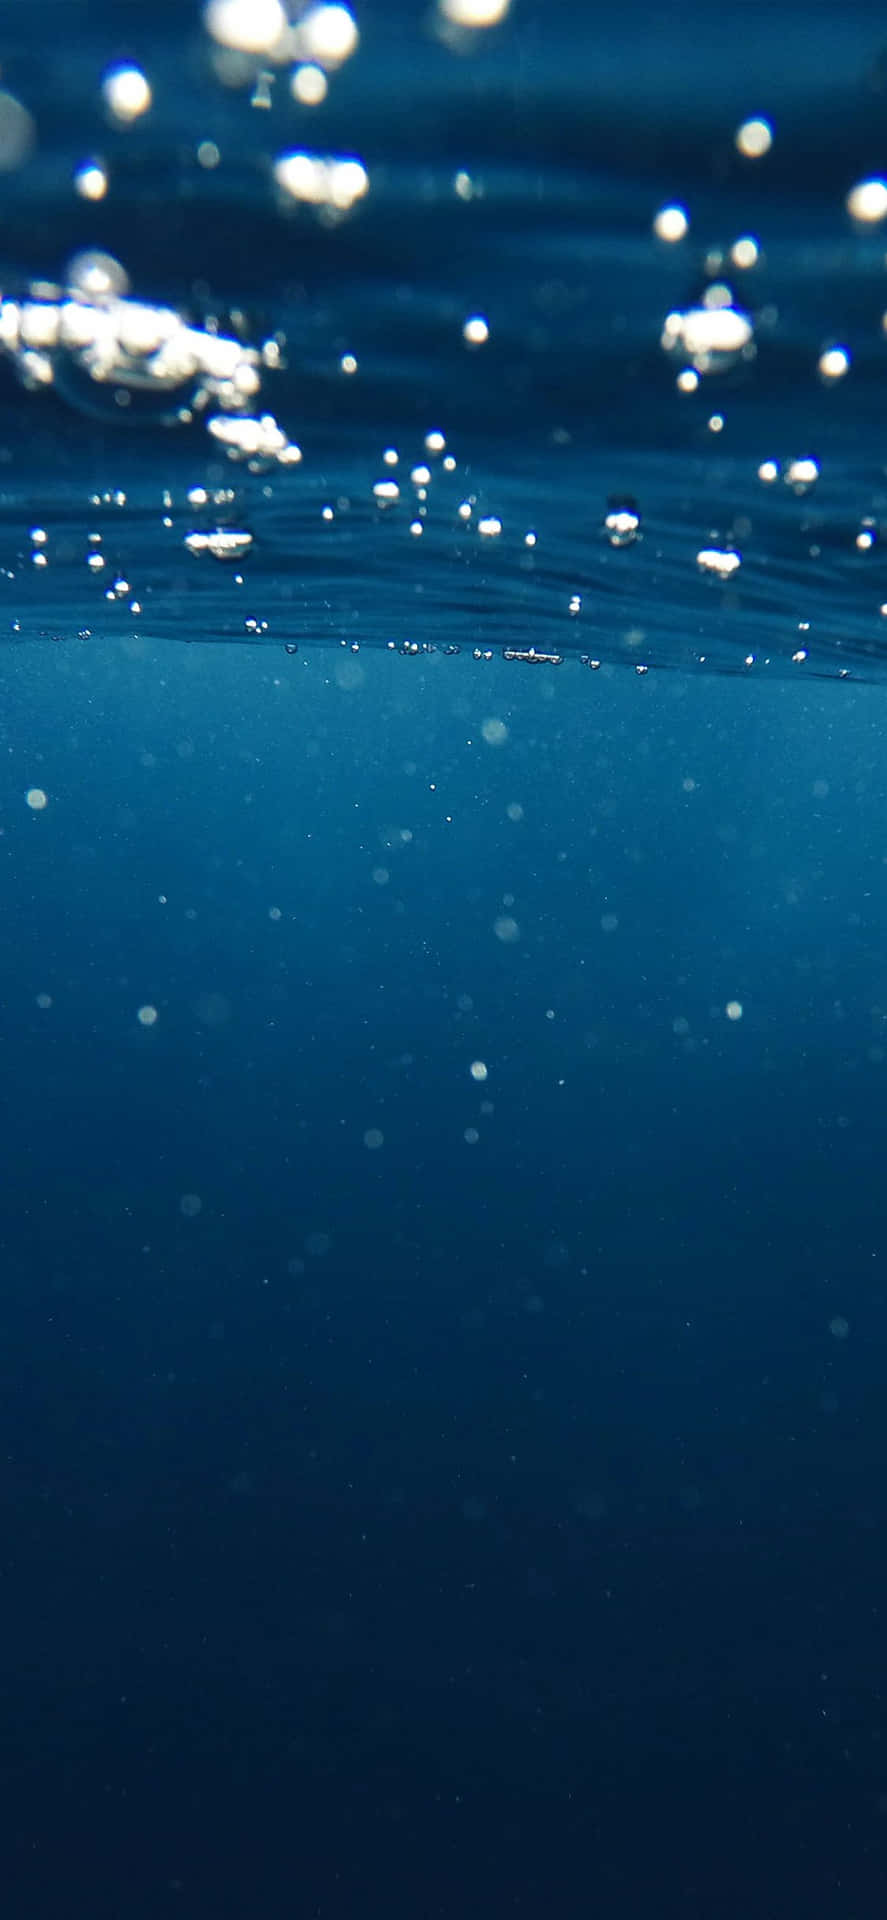 Underwater Water Surface - Underwater Water Surface Wallpaper